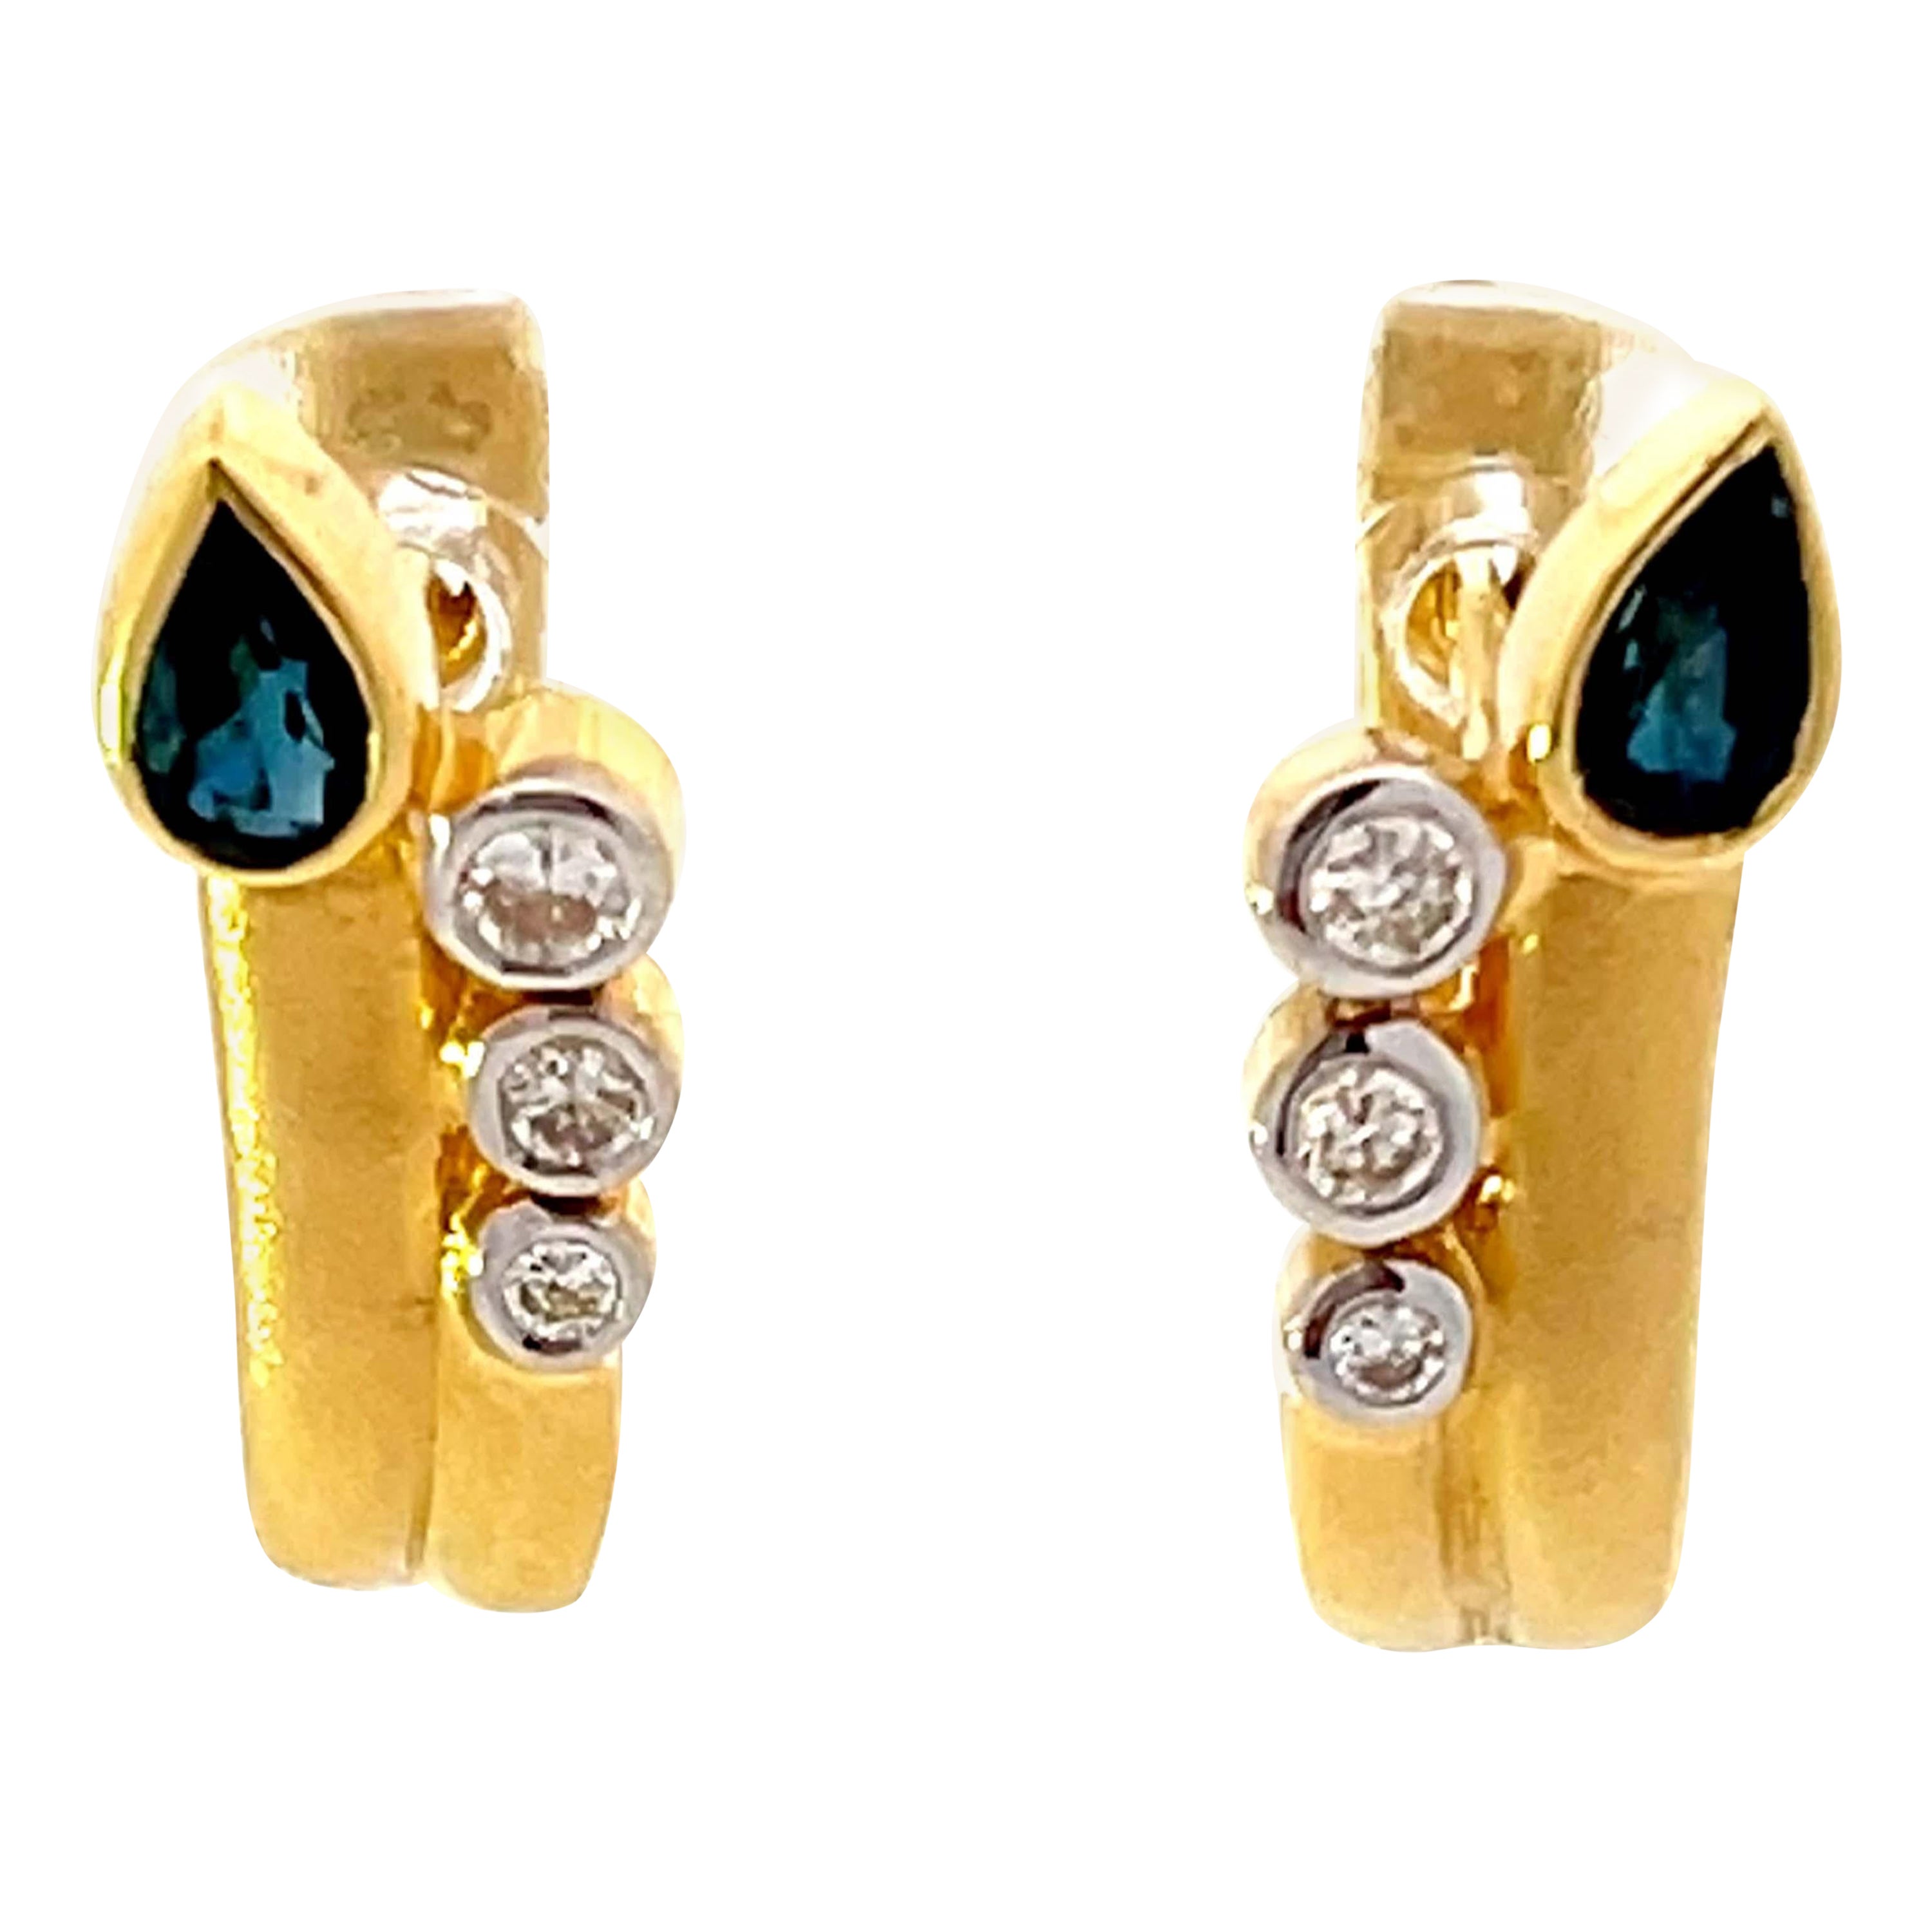 Satin Finish Sapphire and Diamond Earrings 18K Yellow Gold